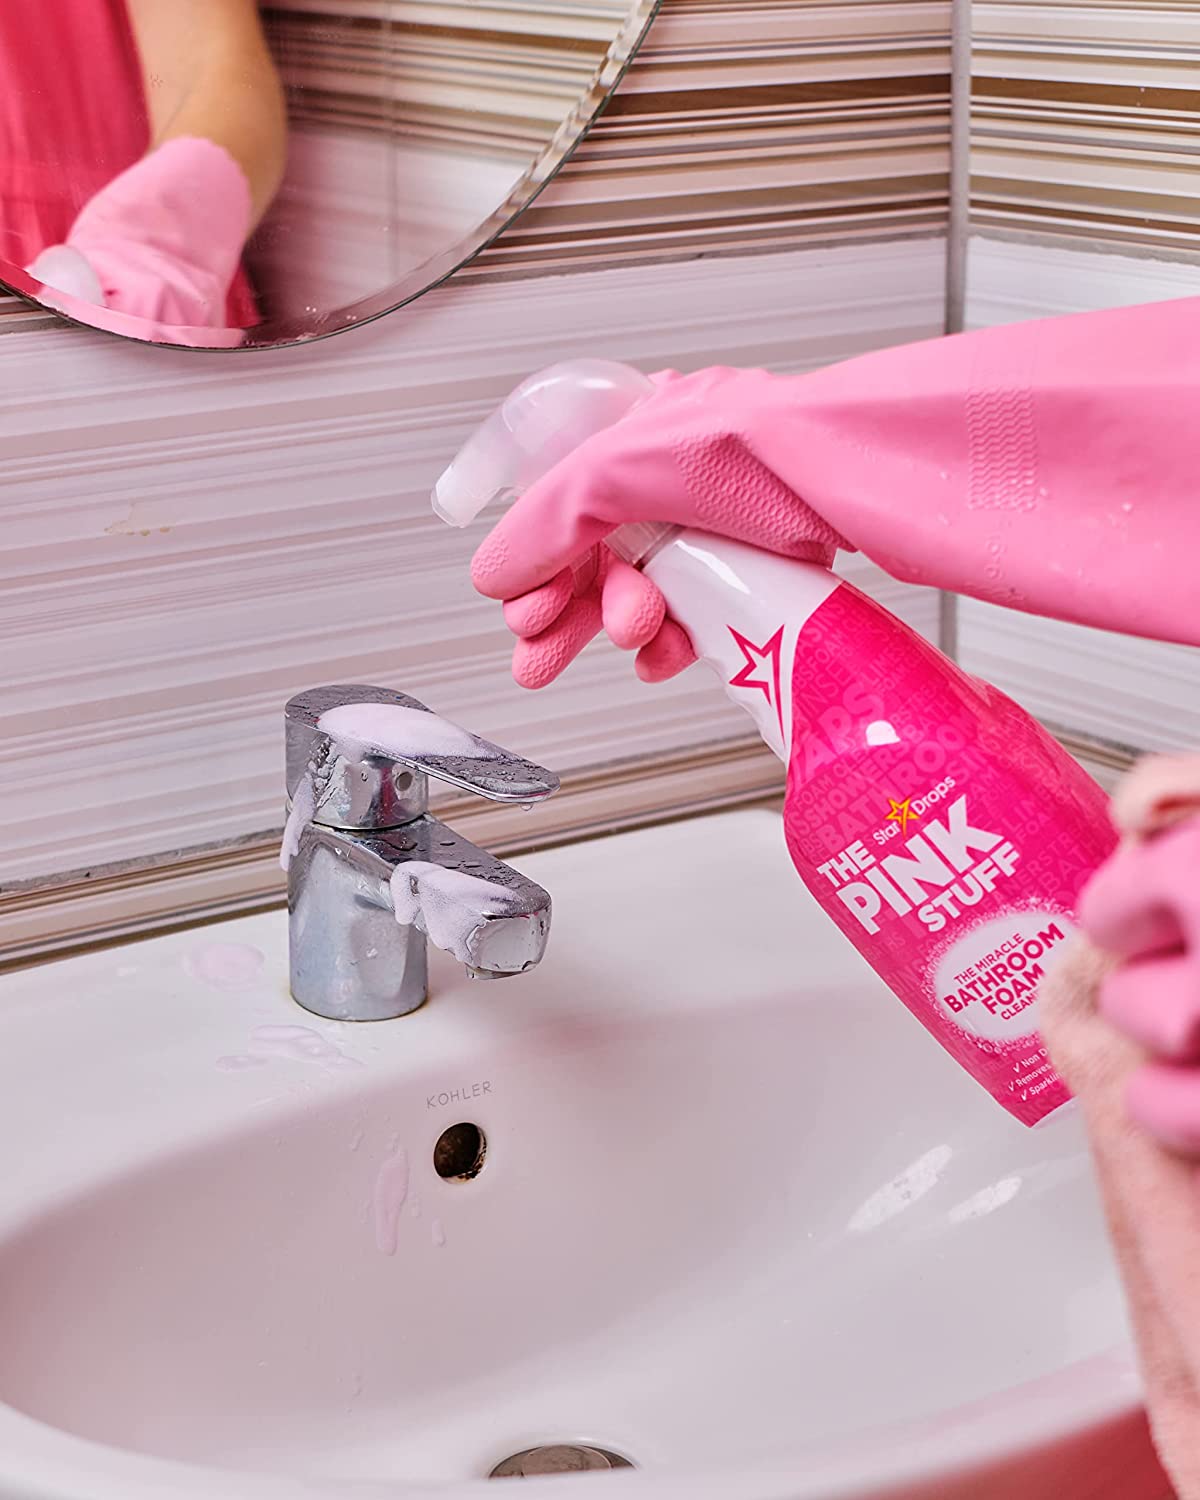 Stardrops - The Pink Stuff - Miracle Bathroom Foam Cleaner 750ml